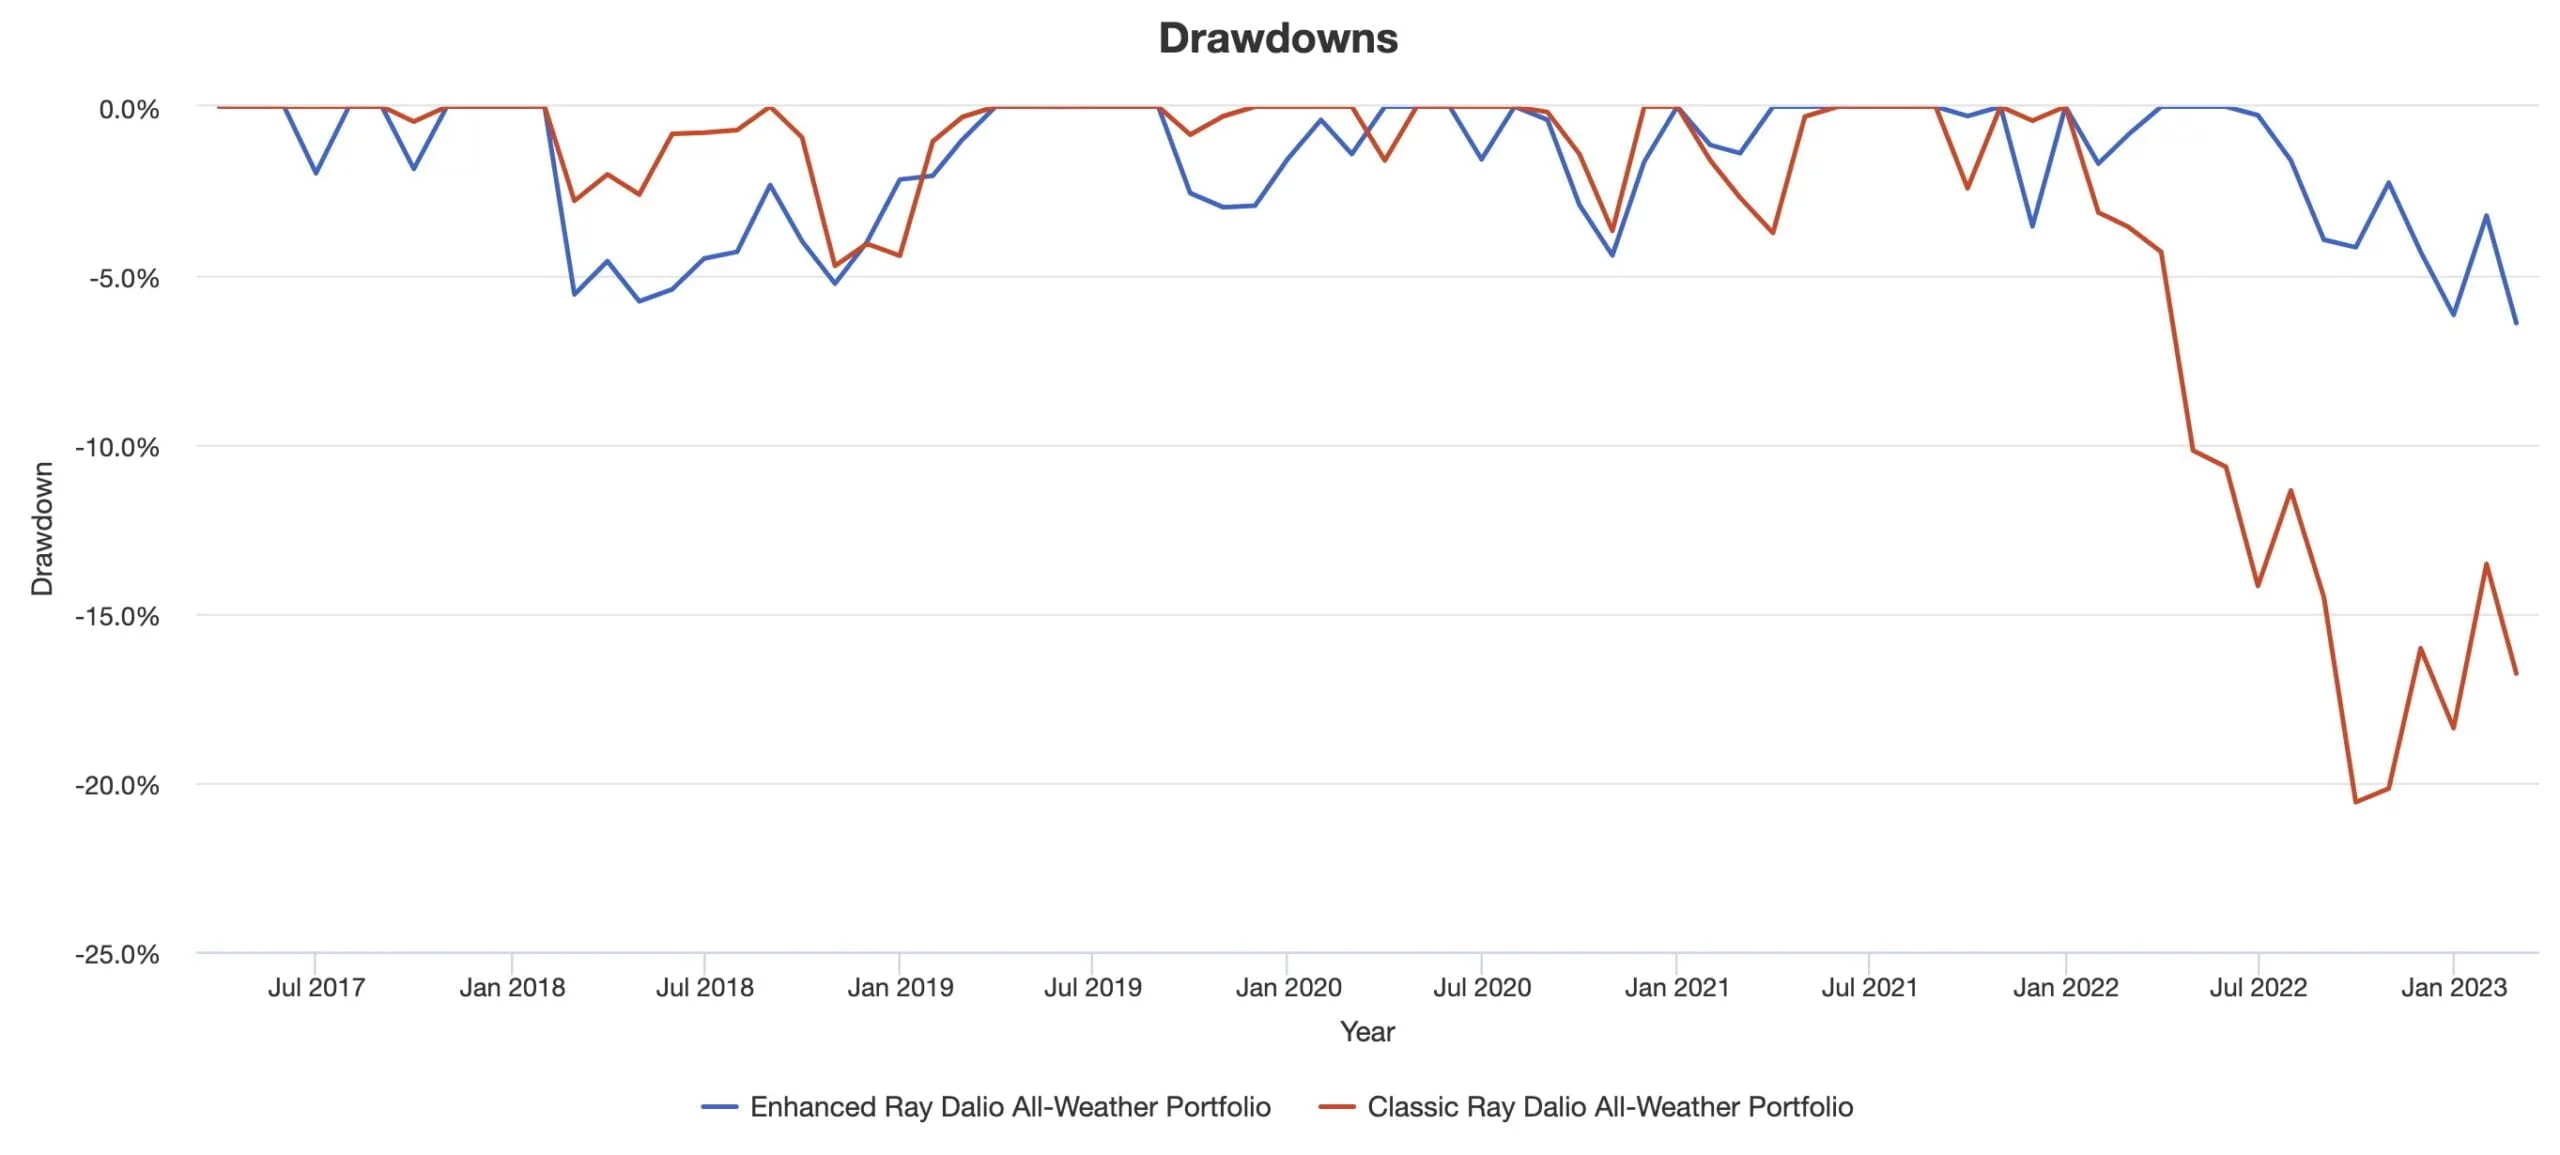 The Enhanced Ray Dalio All-Weather Portfolio vs Classic All-Weather Portfolio drawdowns 